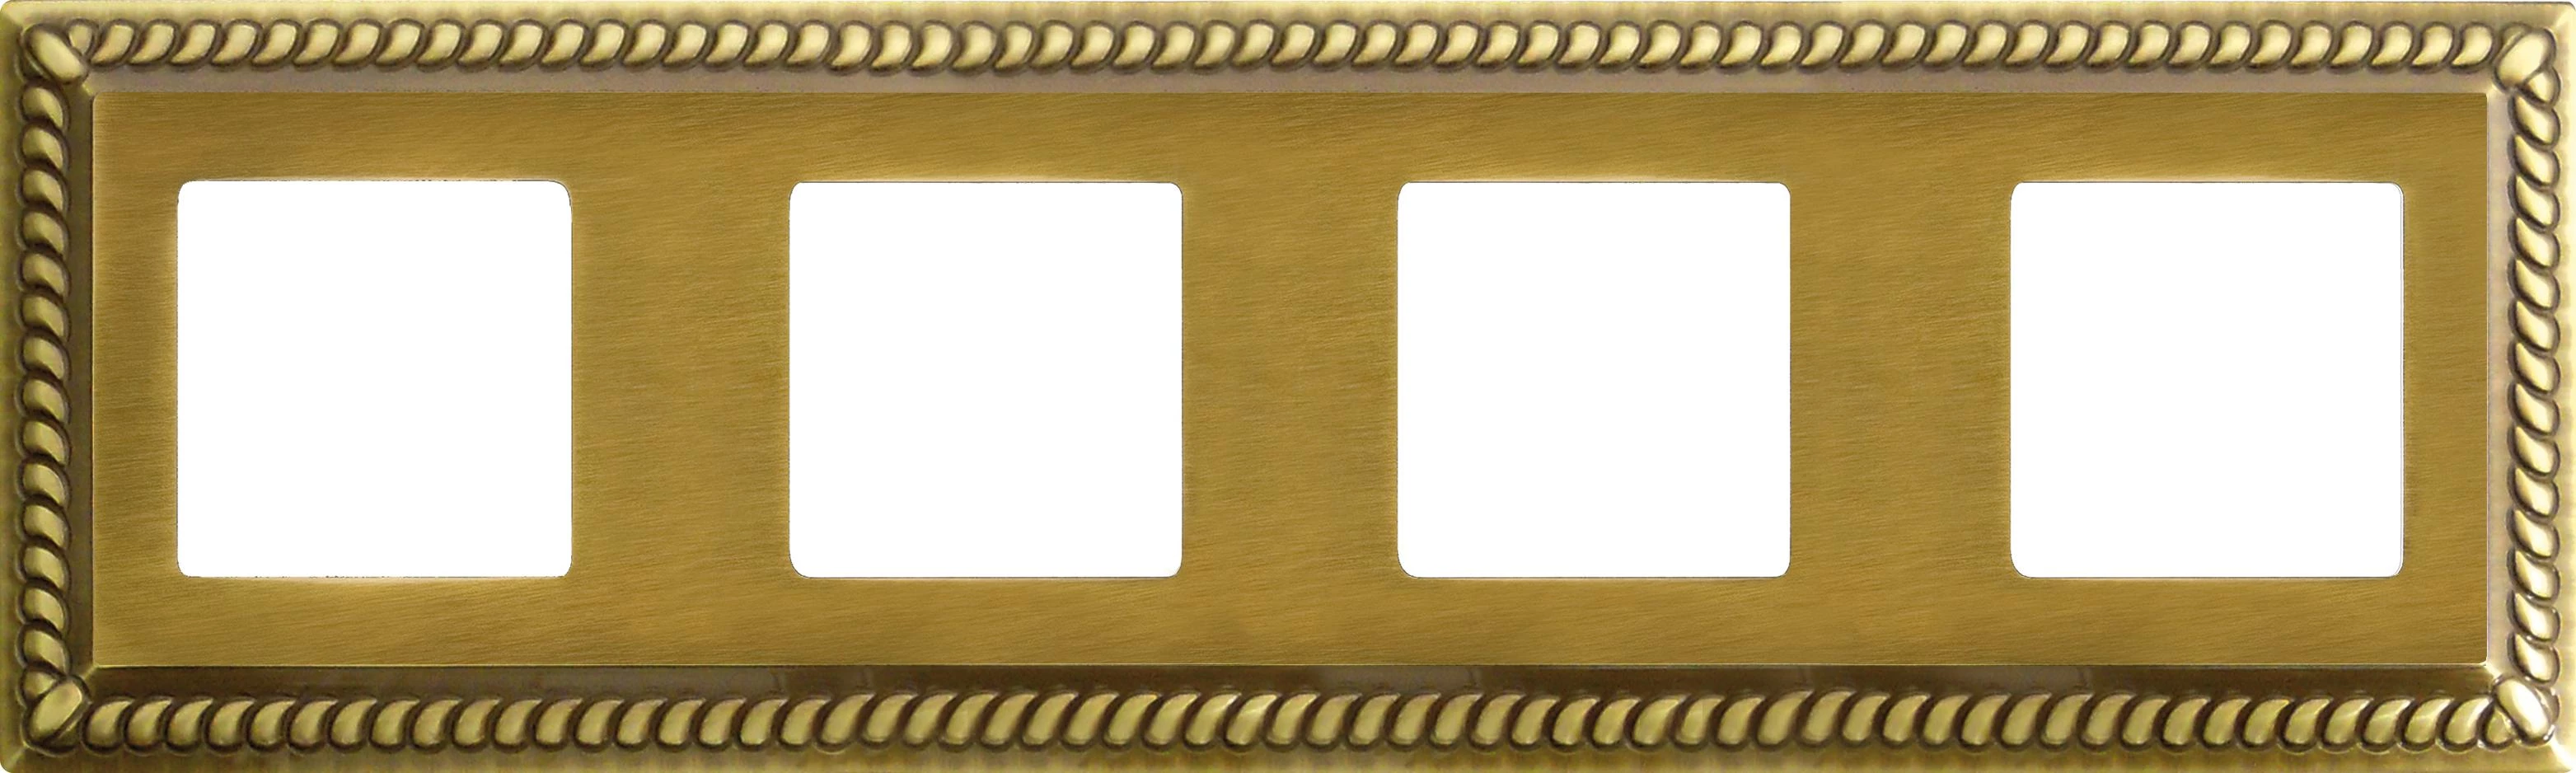  артикул FD01234PB название Рамка 4-ая (четверная), цвет Светлая бронза, Sevilla, Fede